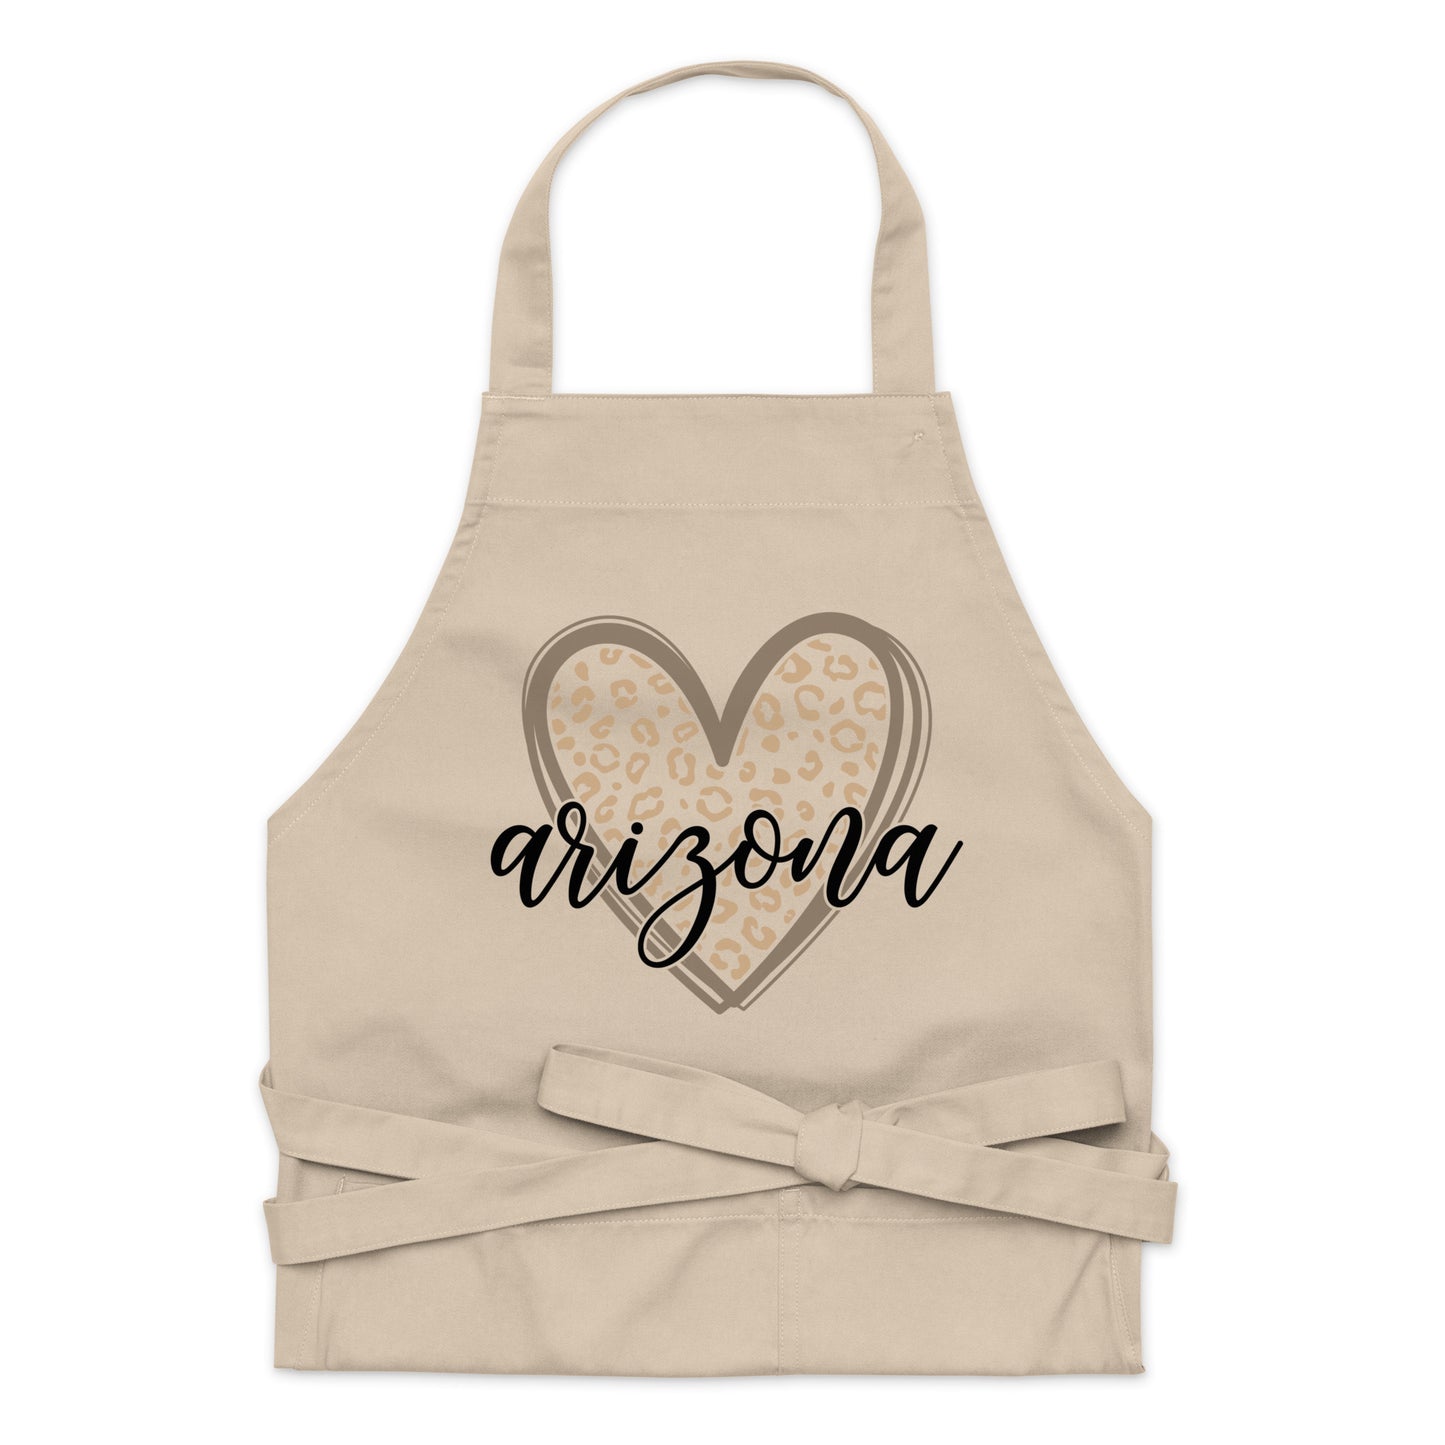 Arizona Heart Organic cotton apron